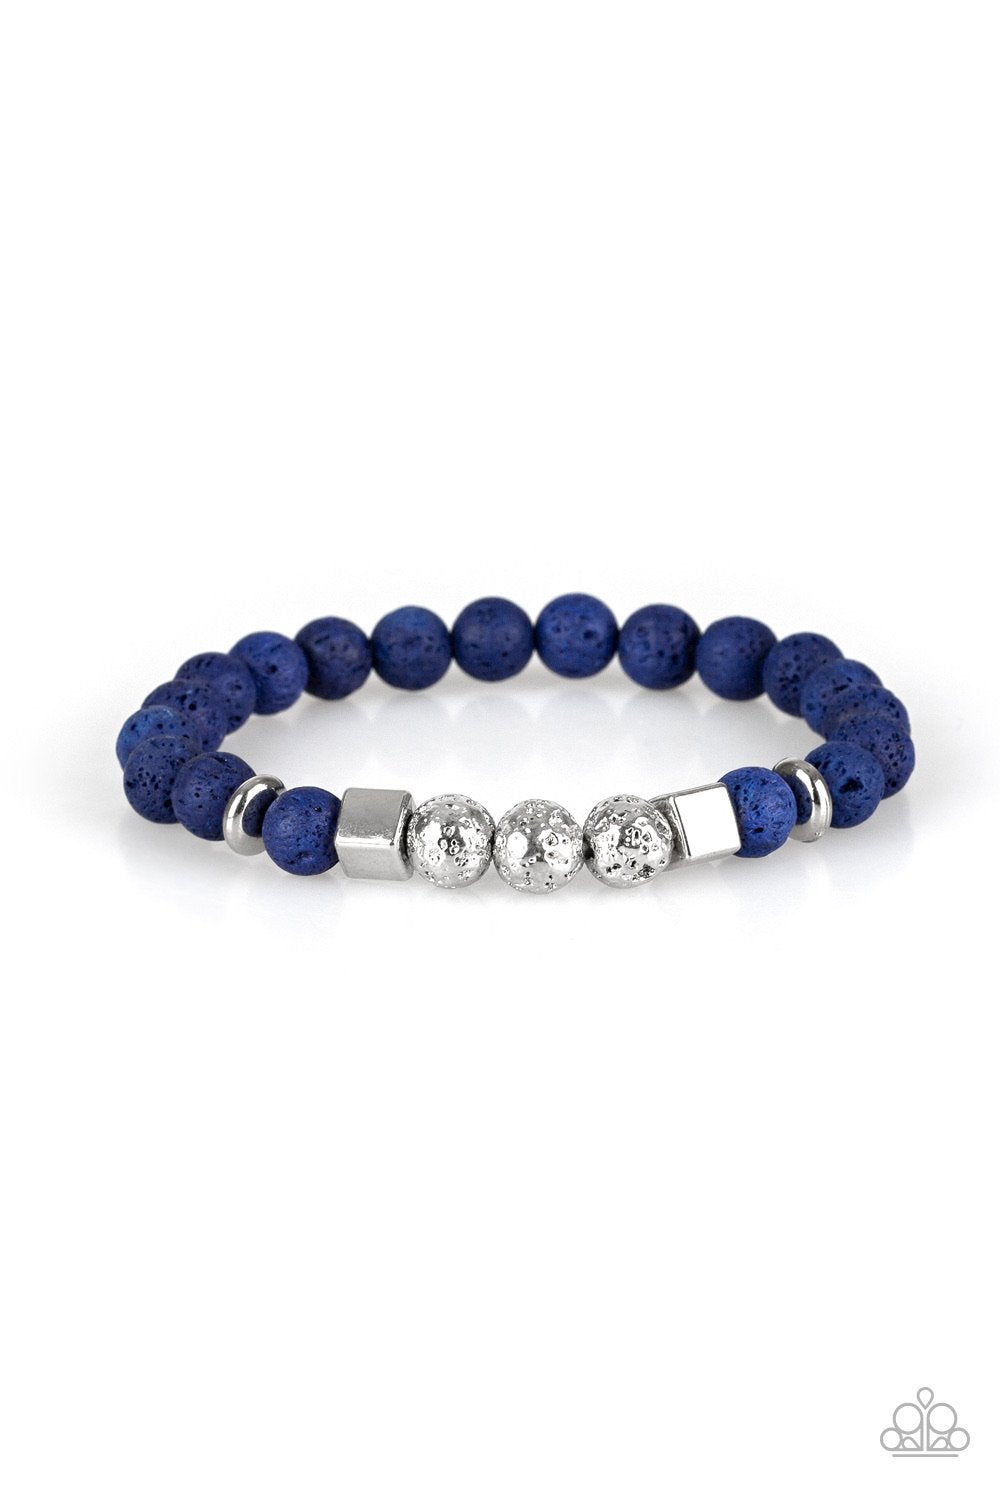 SENSEI and Sensibility - Paparazzi - Blue Lava Bead Stretchy Bracelet